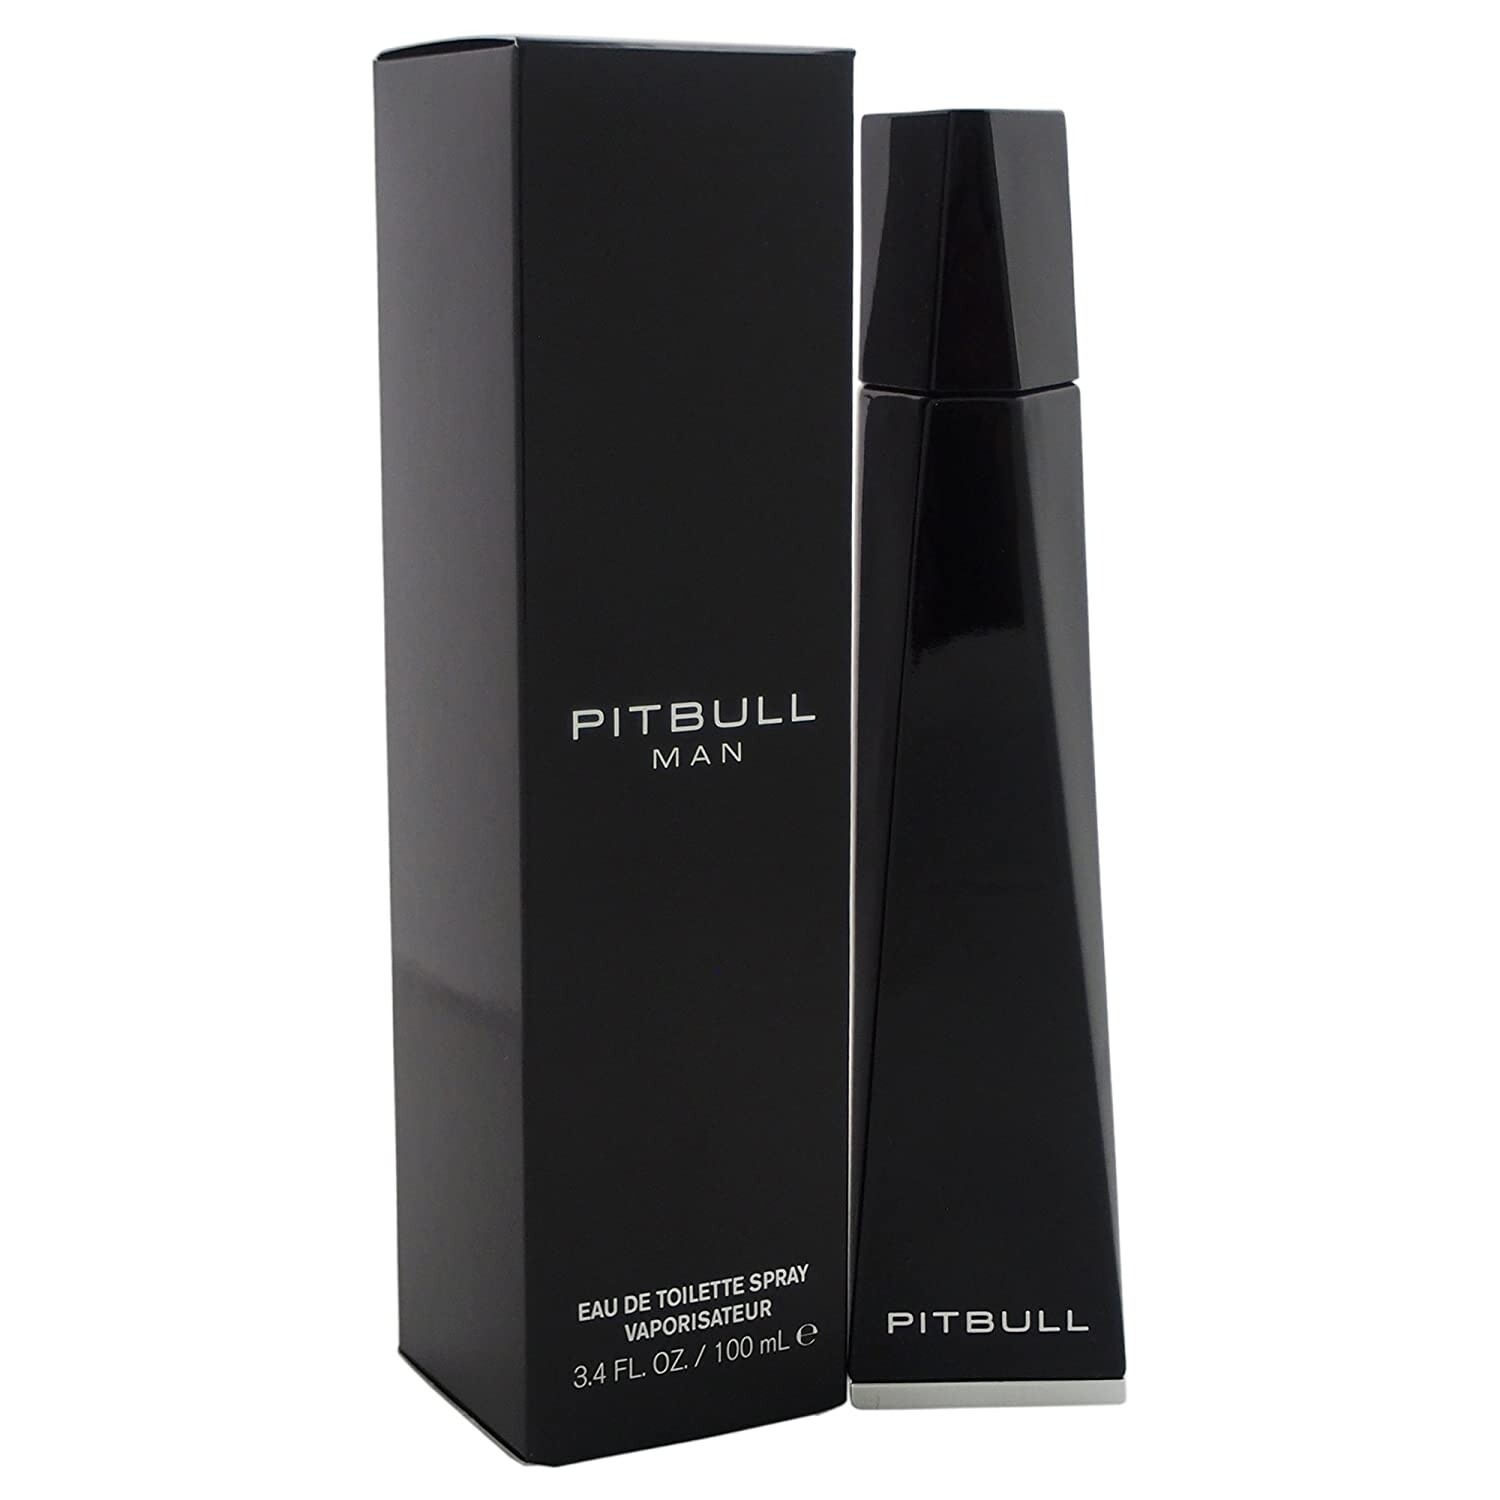 Pitbull man perfume